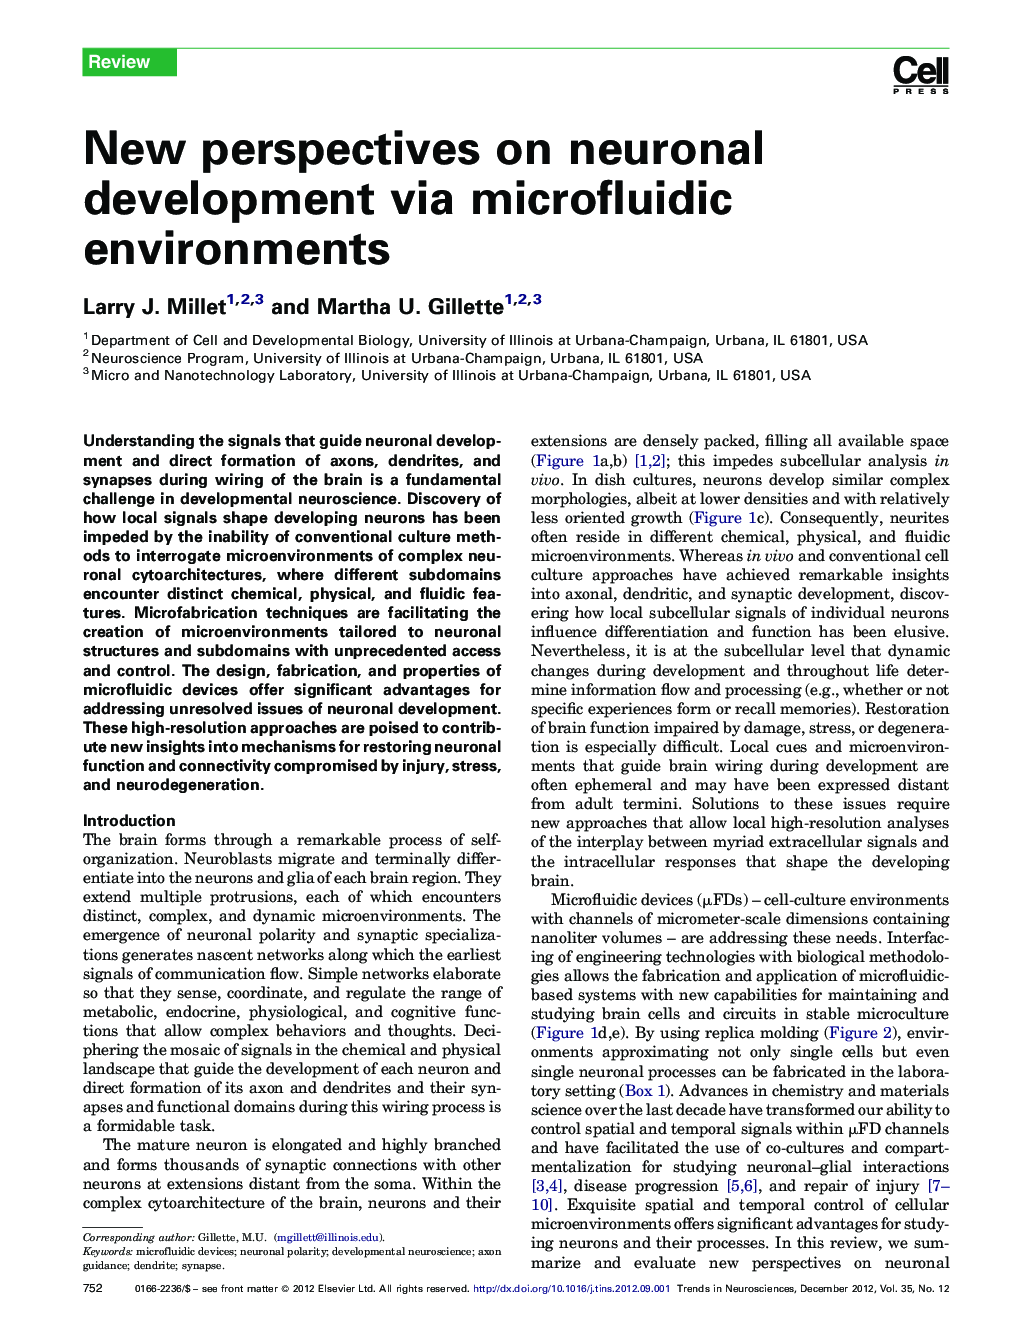 New perspectives on neuronal development via microfluidic environments